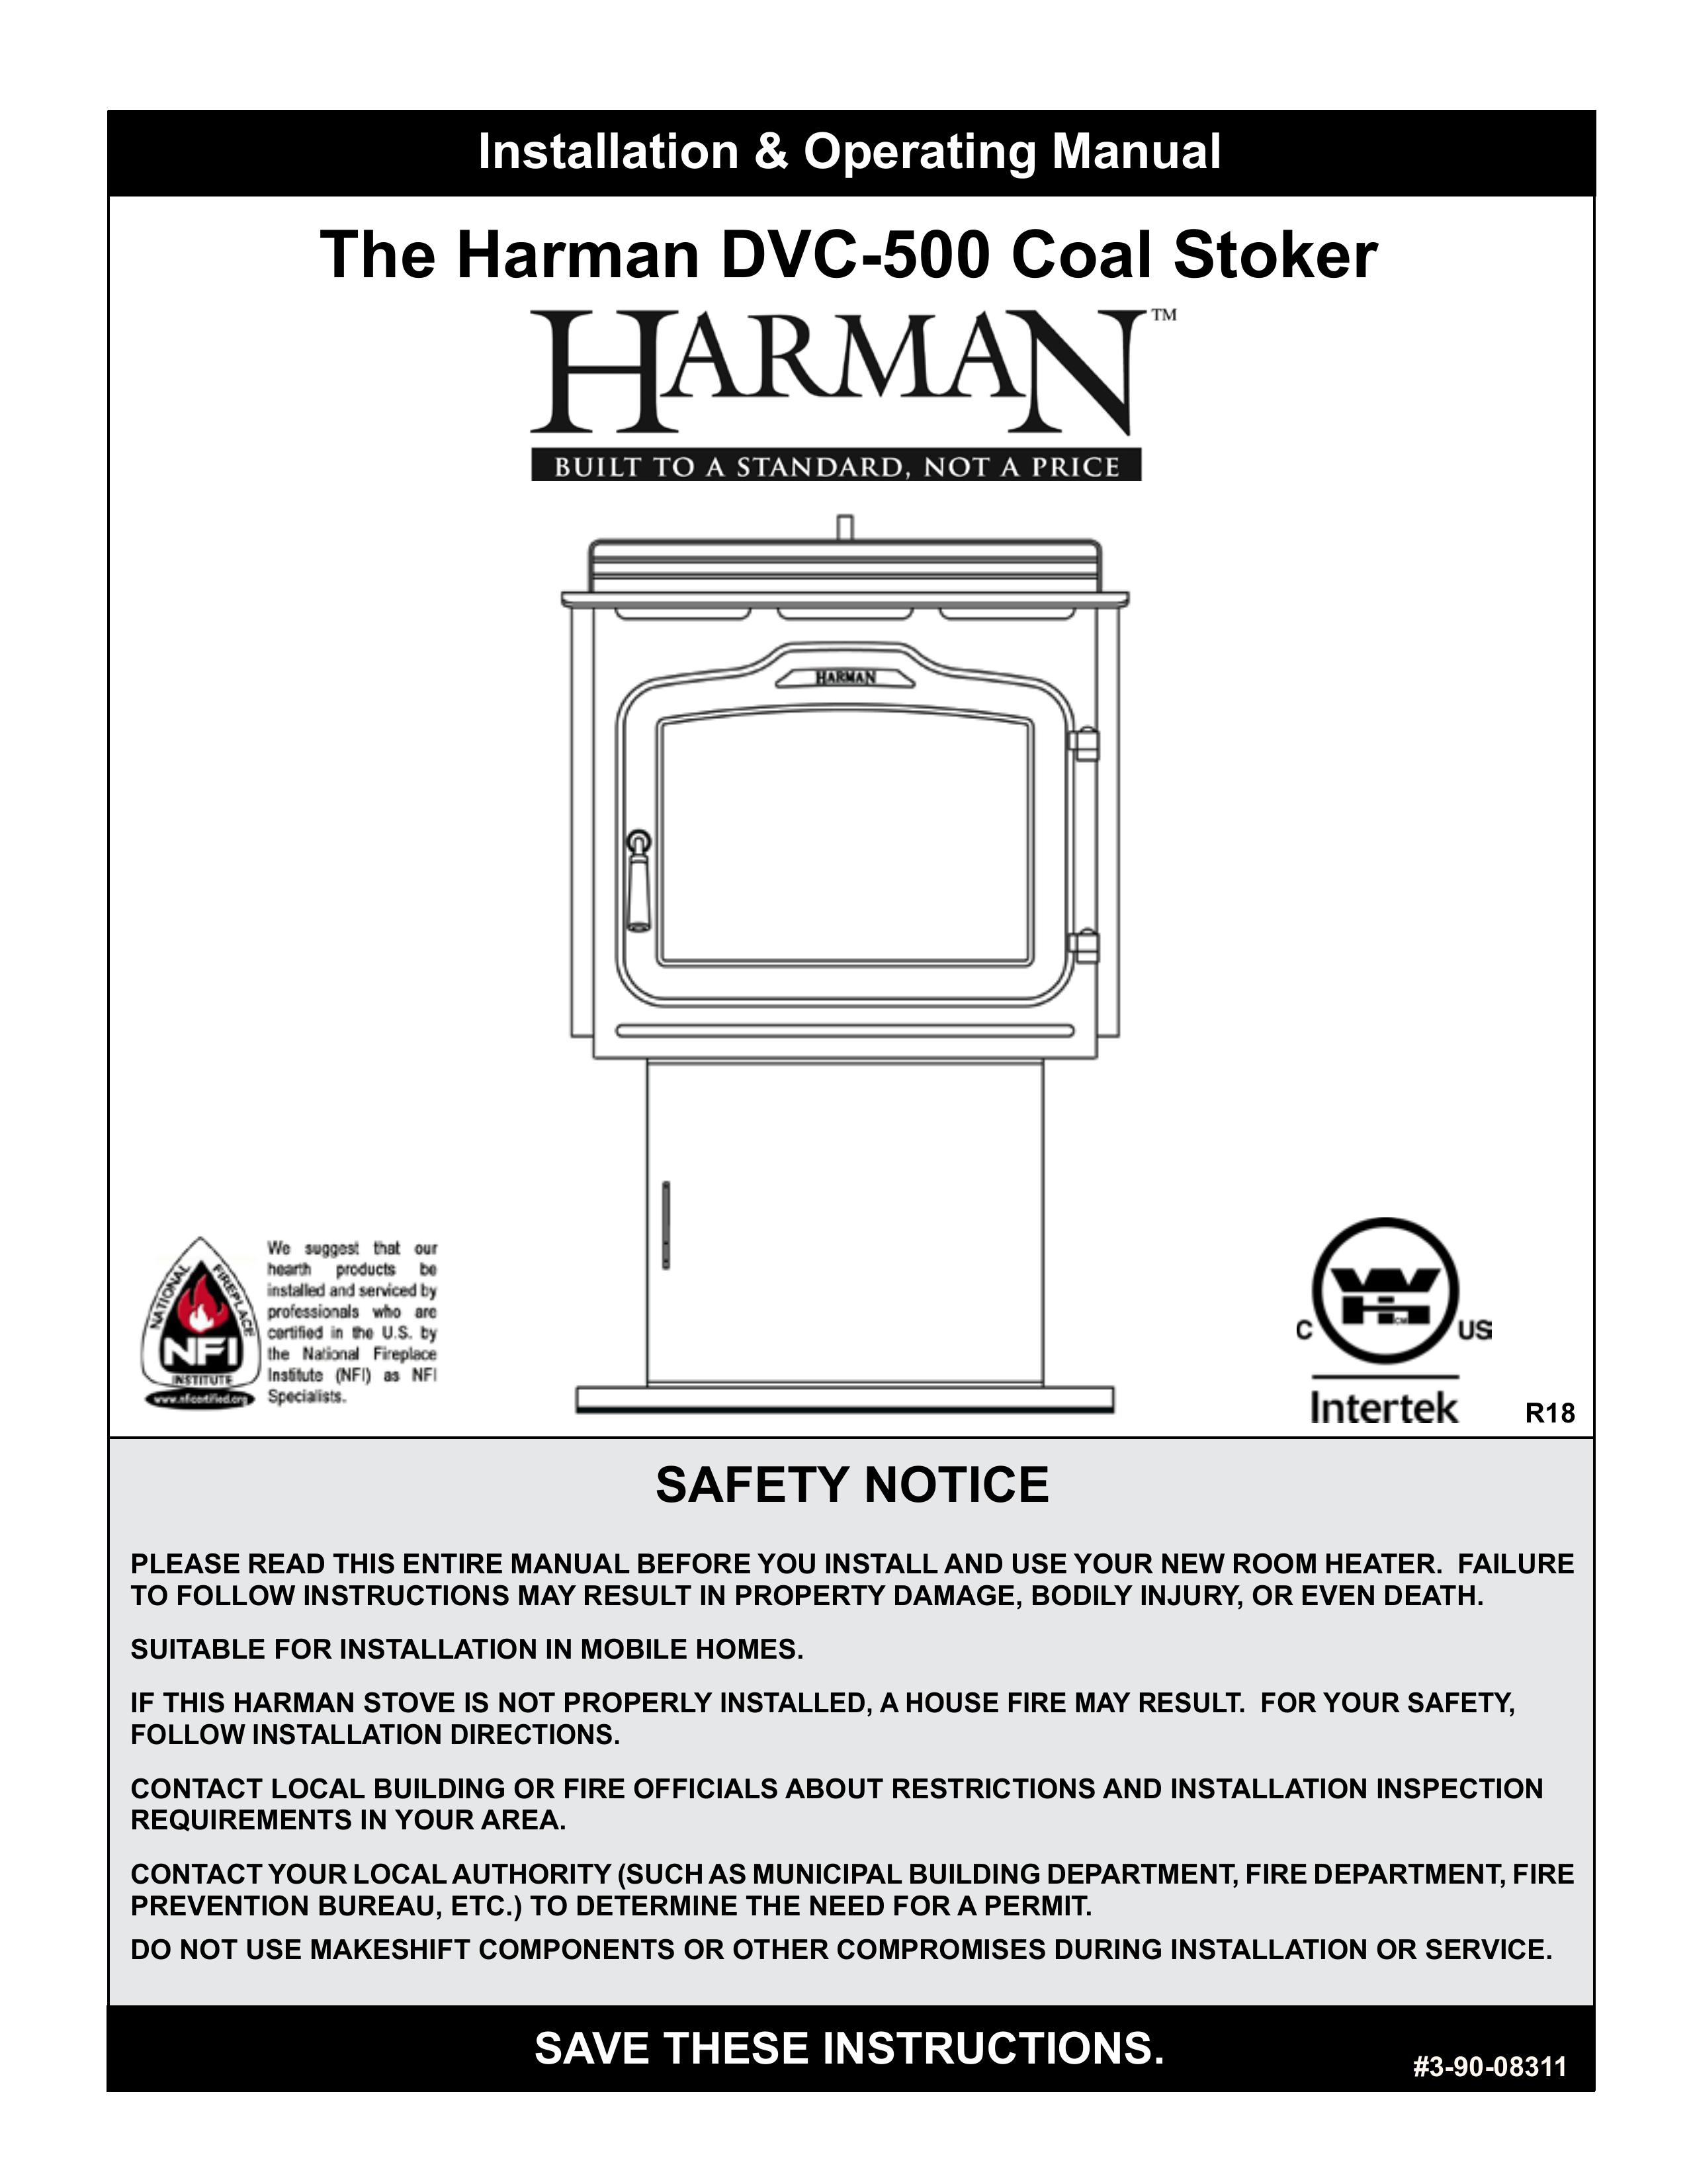 Harman Stove Company DVC-500 Outdoor Fireplace User Manual